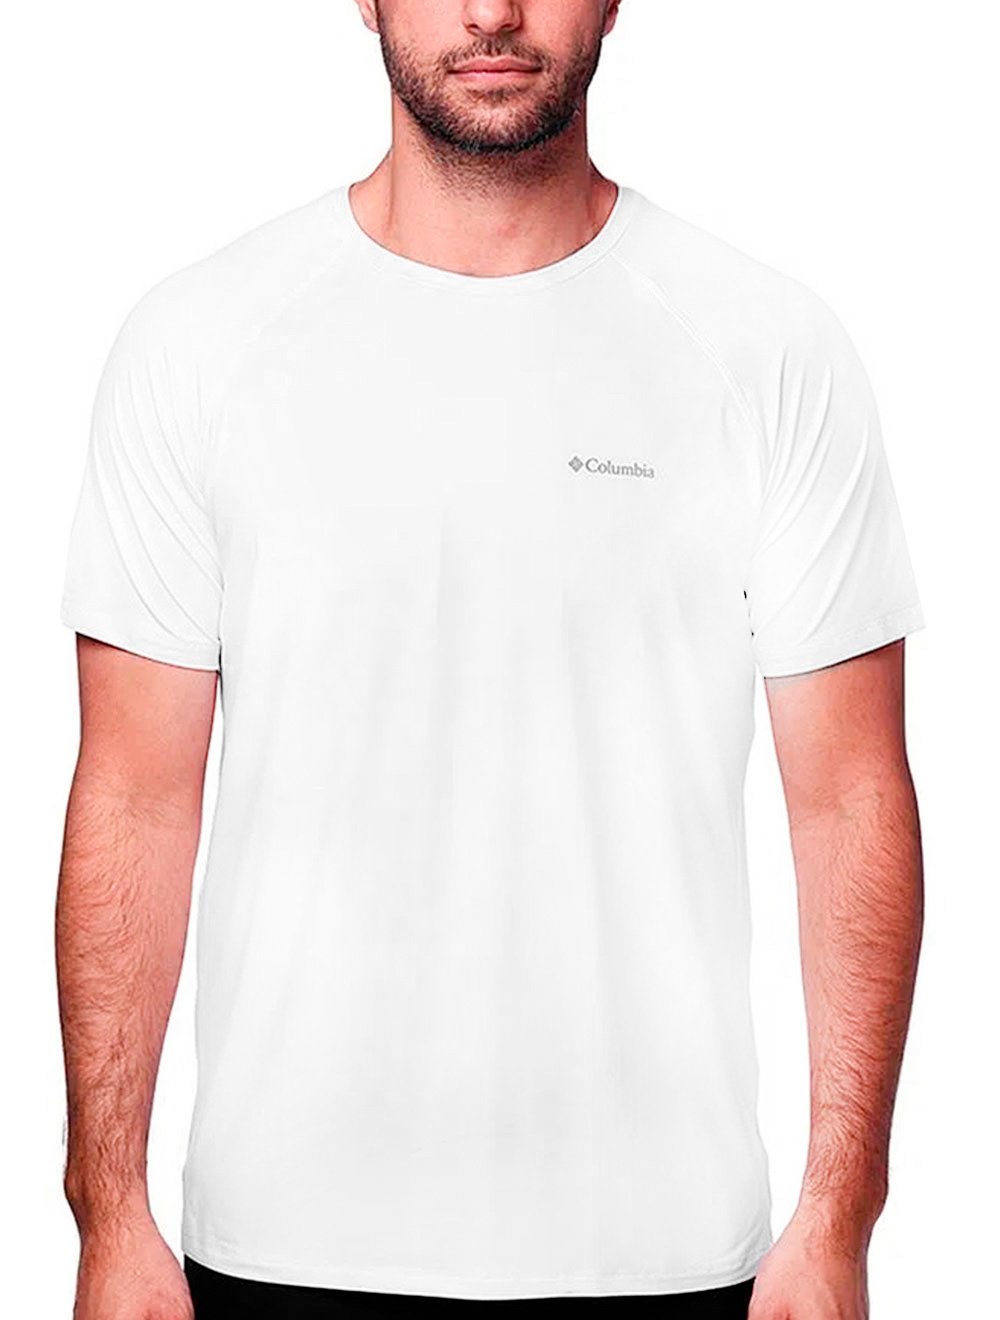 Camiseta Columbia Masculina Basic Logo Branca